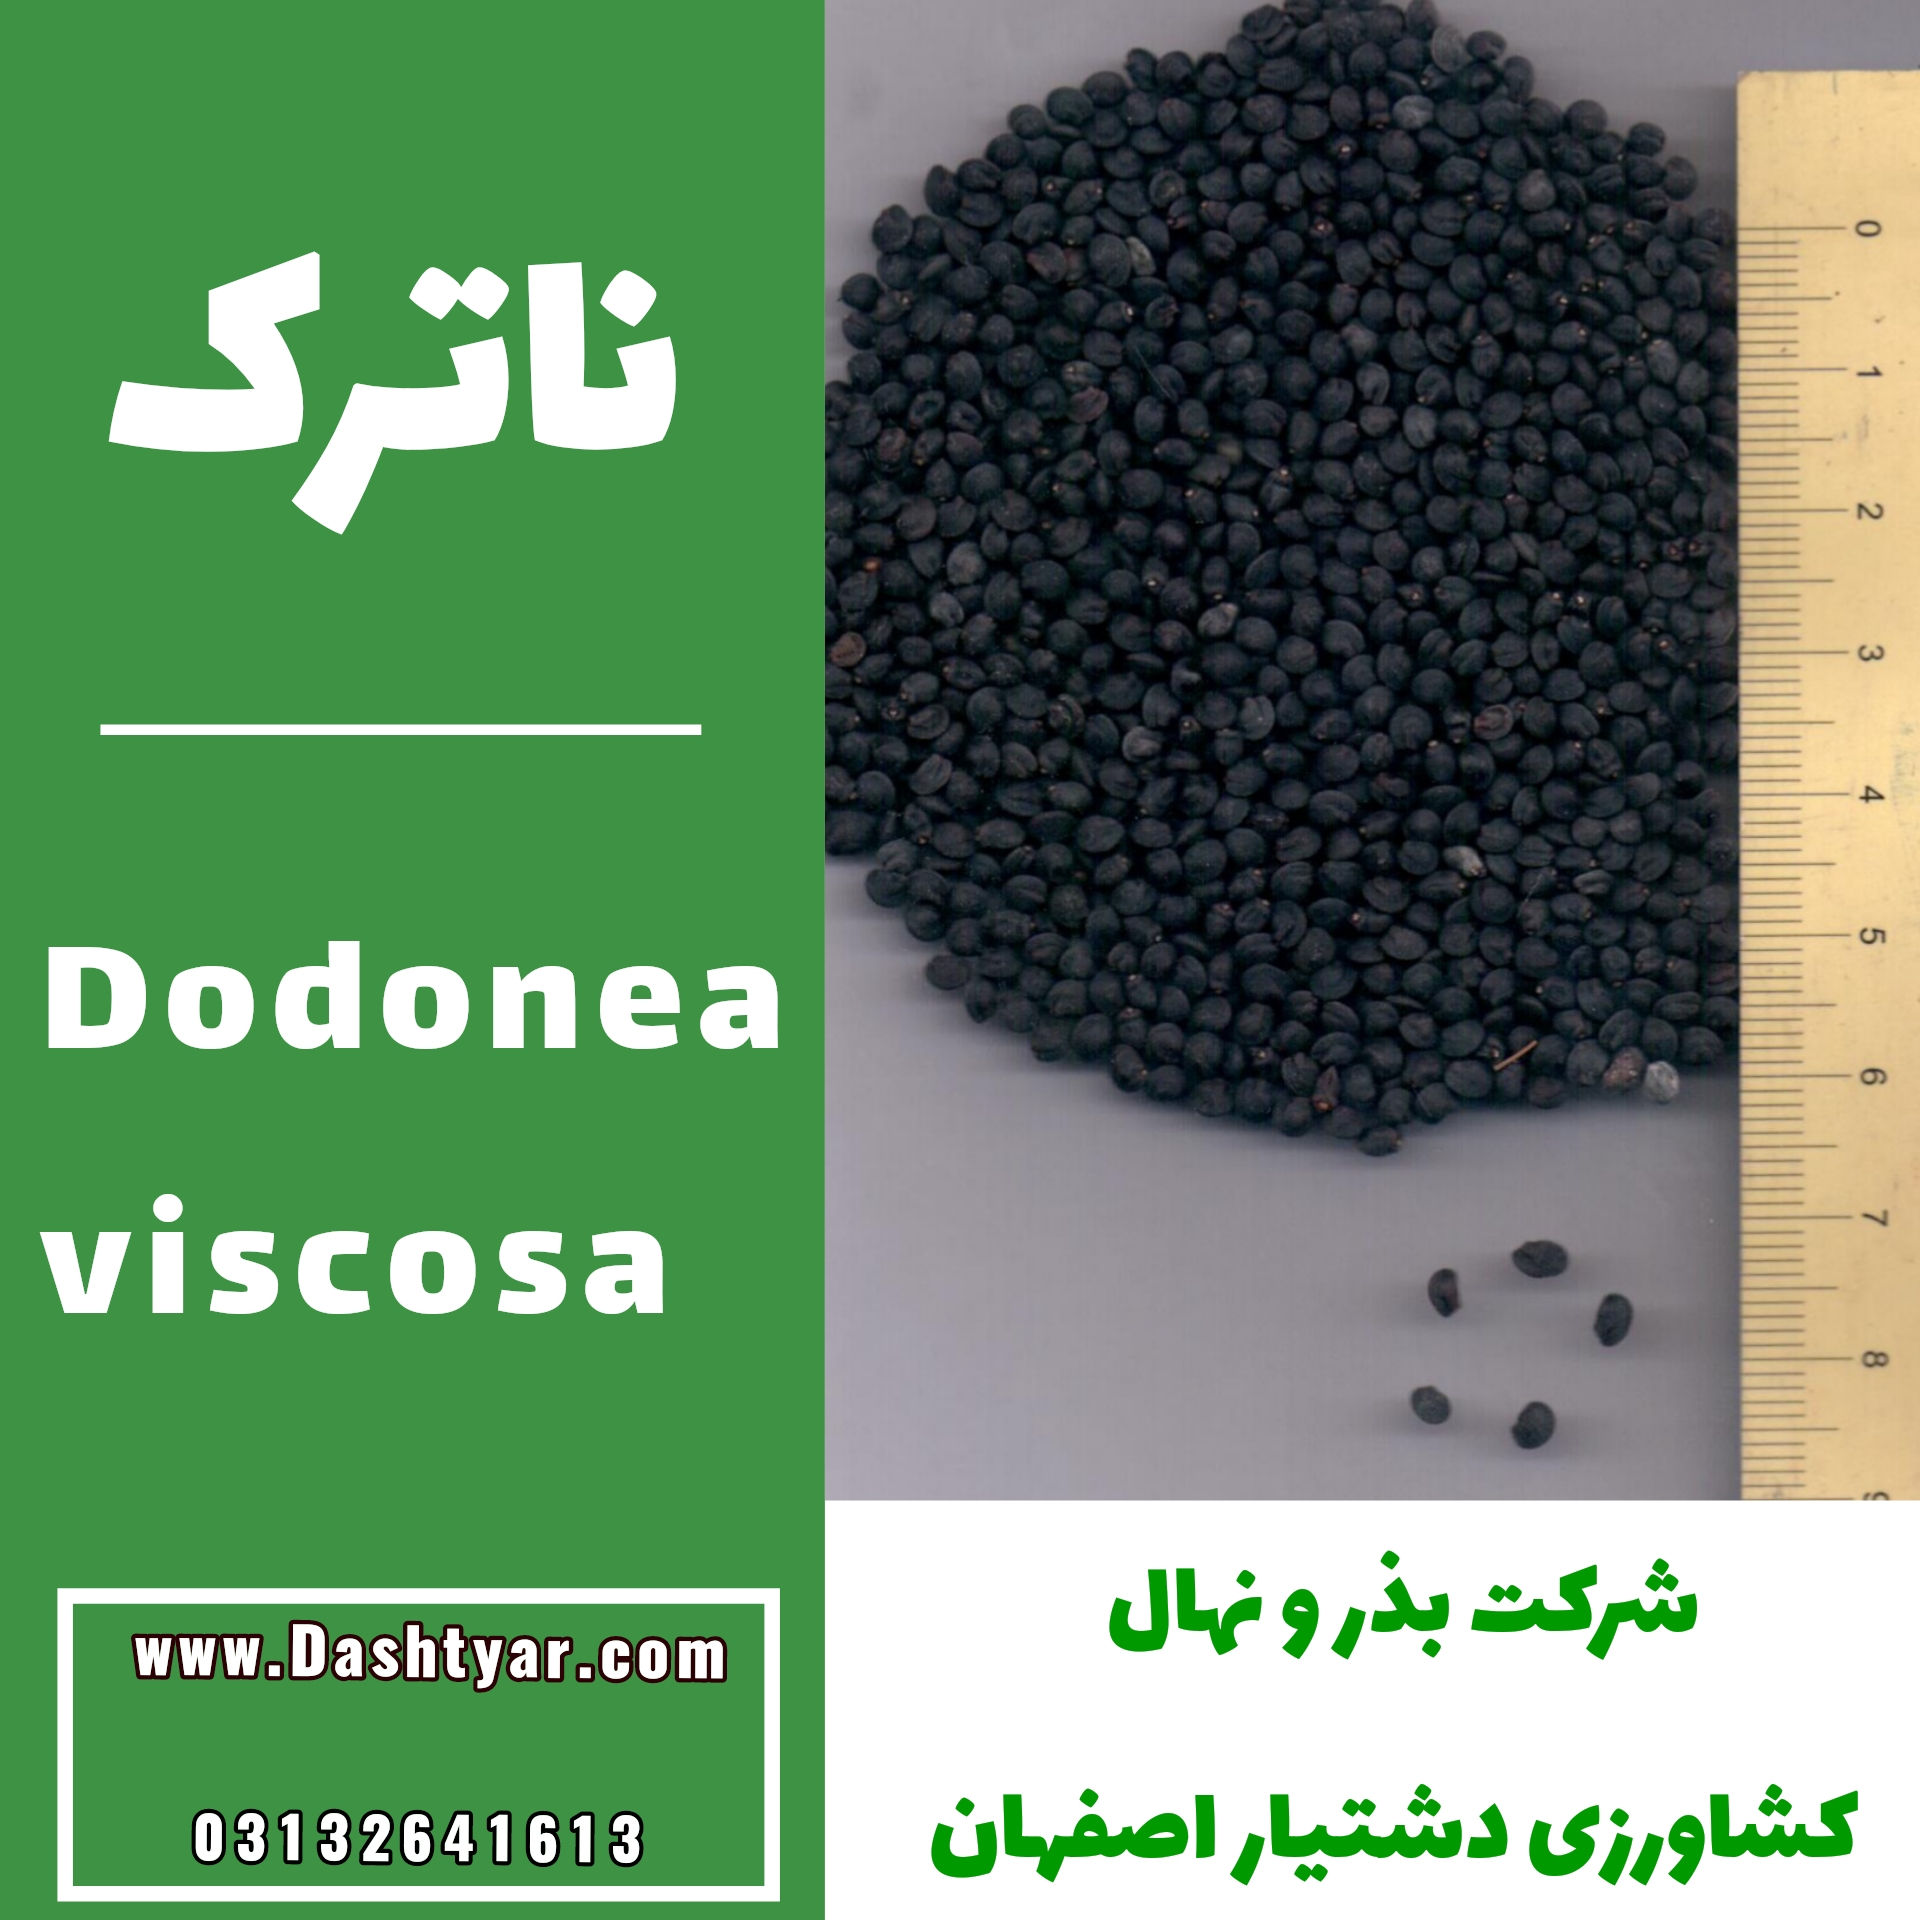 بذر ناترک dodonea viscosa